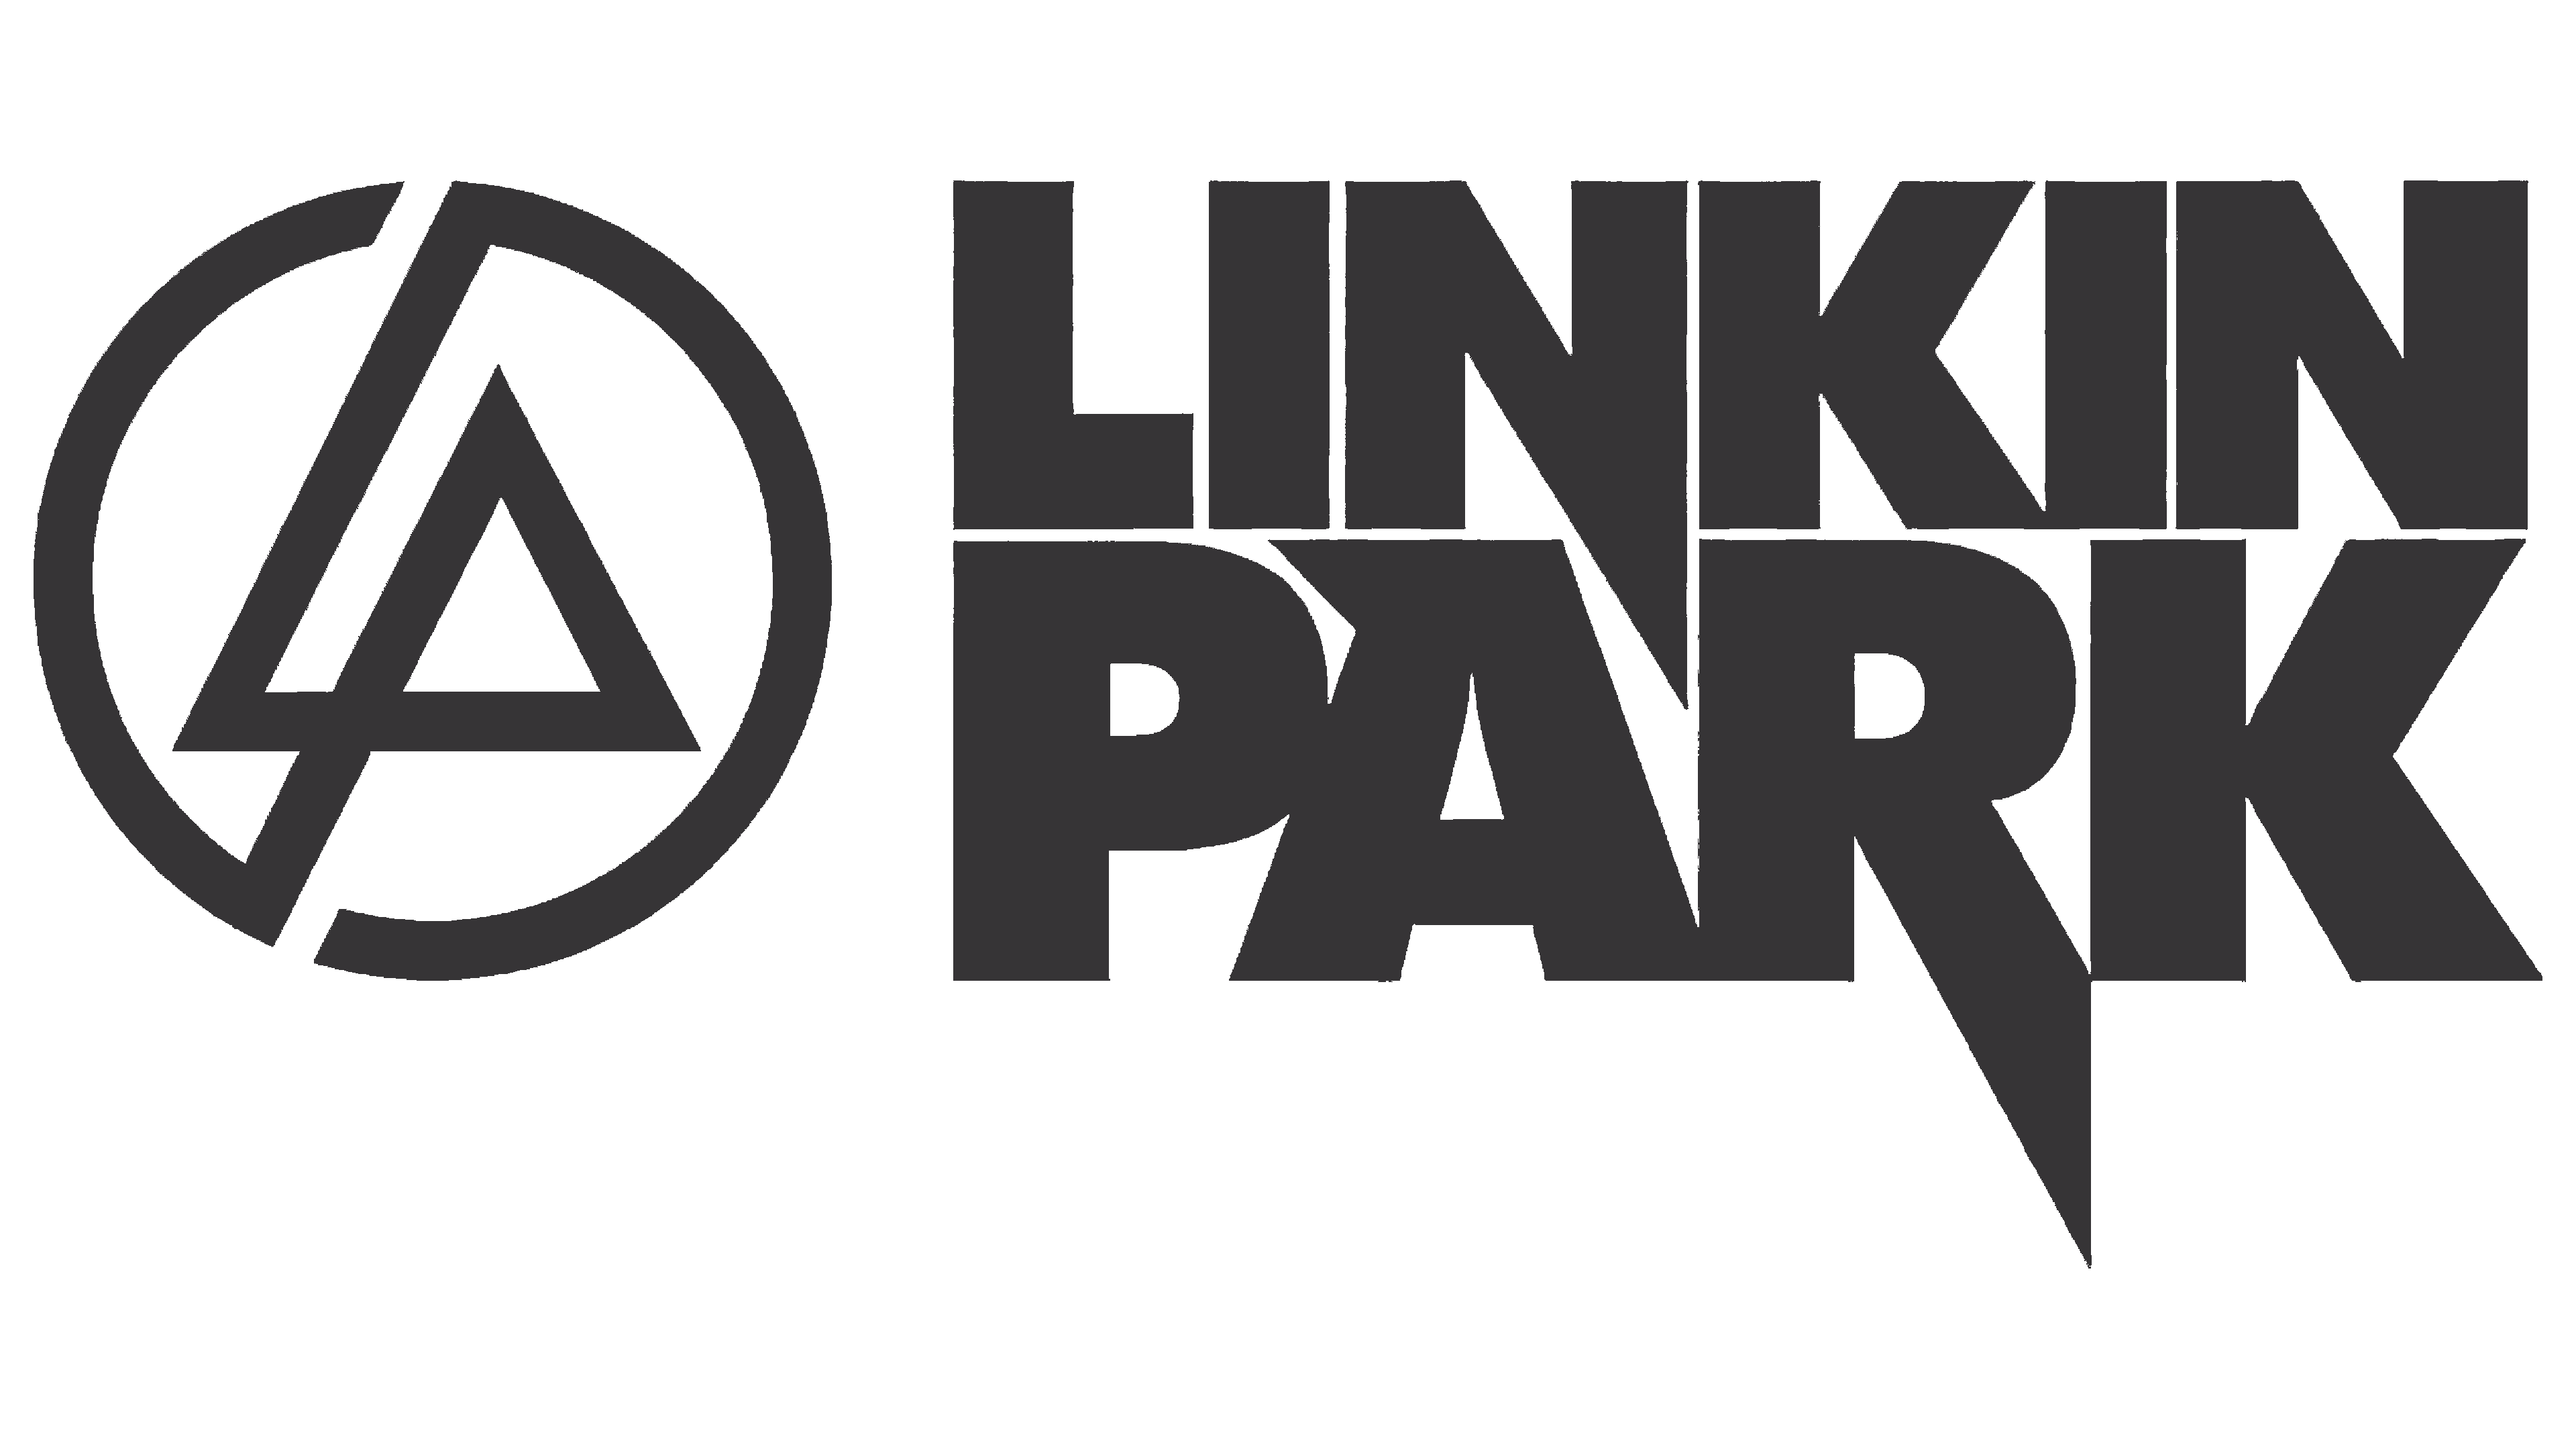 Stream NEW Linkin Park 'Fighting Myself